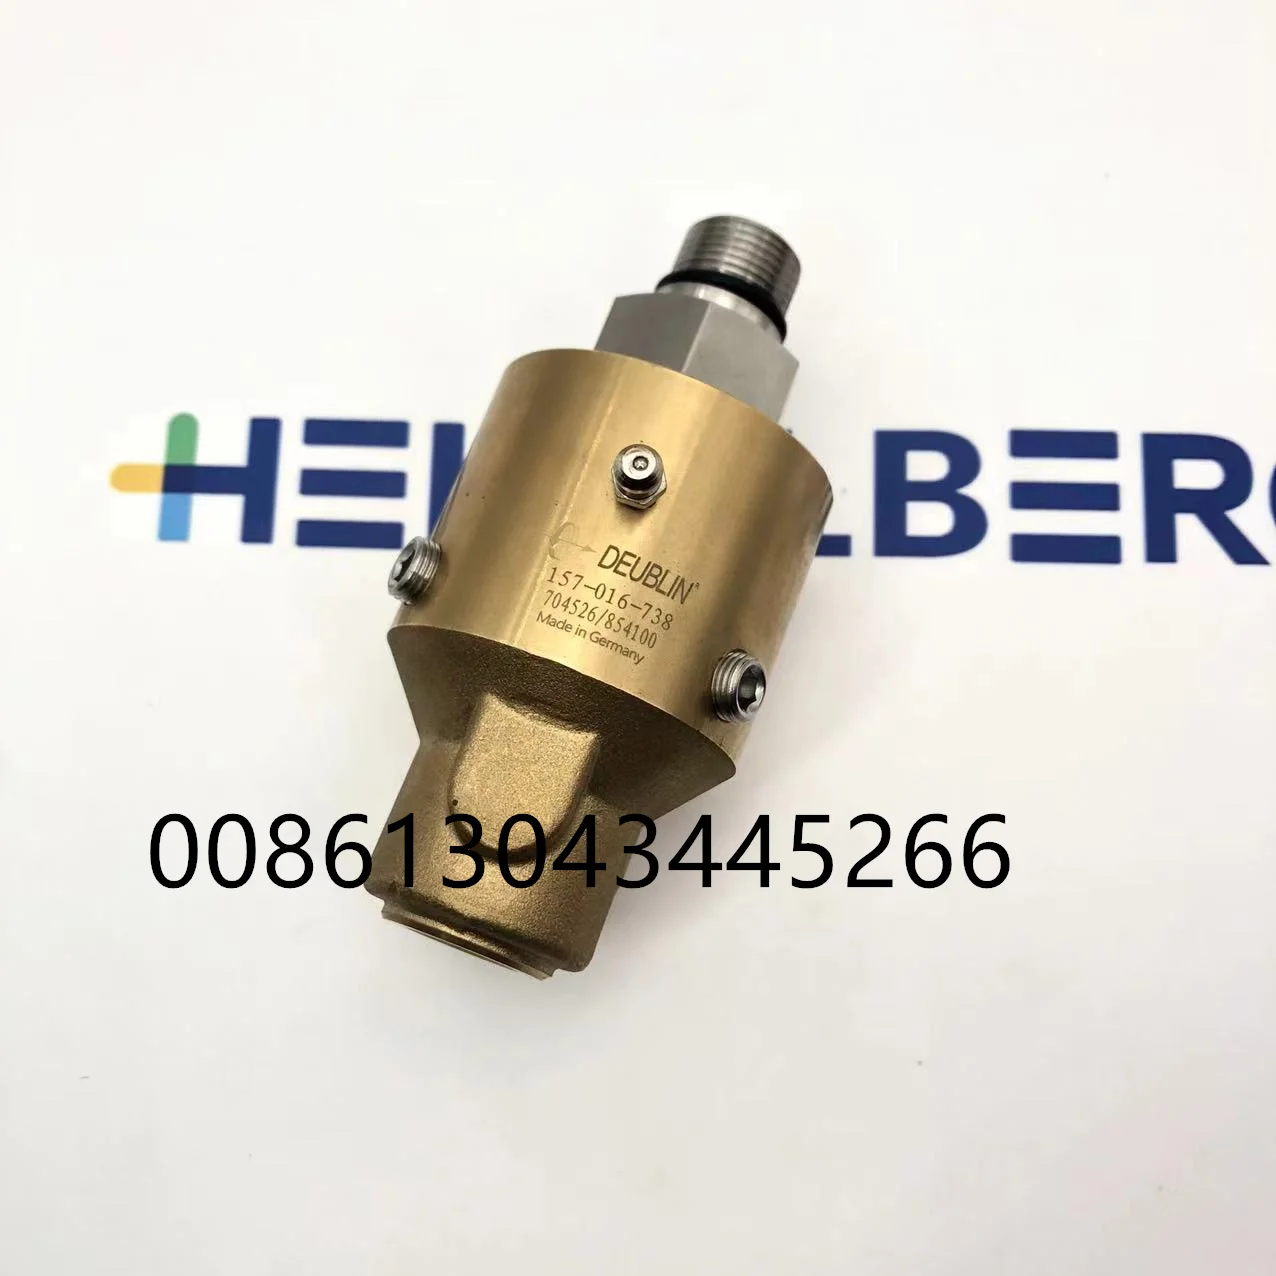 

Best Quality Heidelberg Rotary union 157-016-738 Offset CD102 Alcohol Cooling Head Deublin rotary valve 00.580.2807